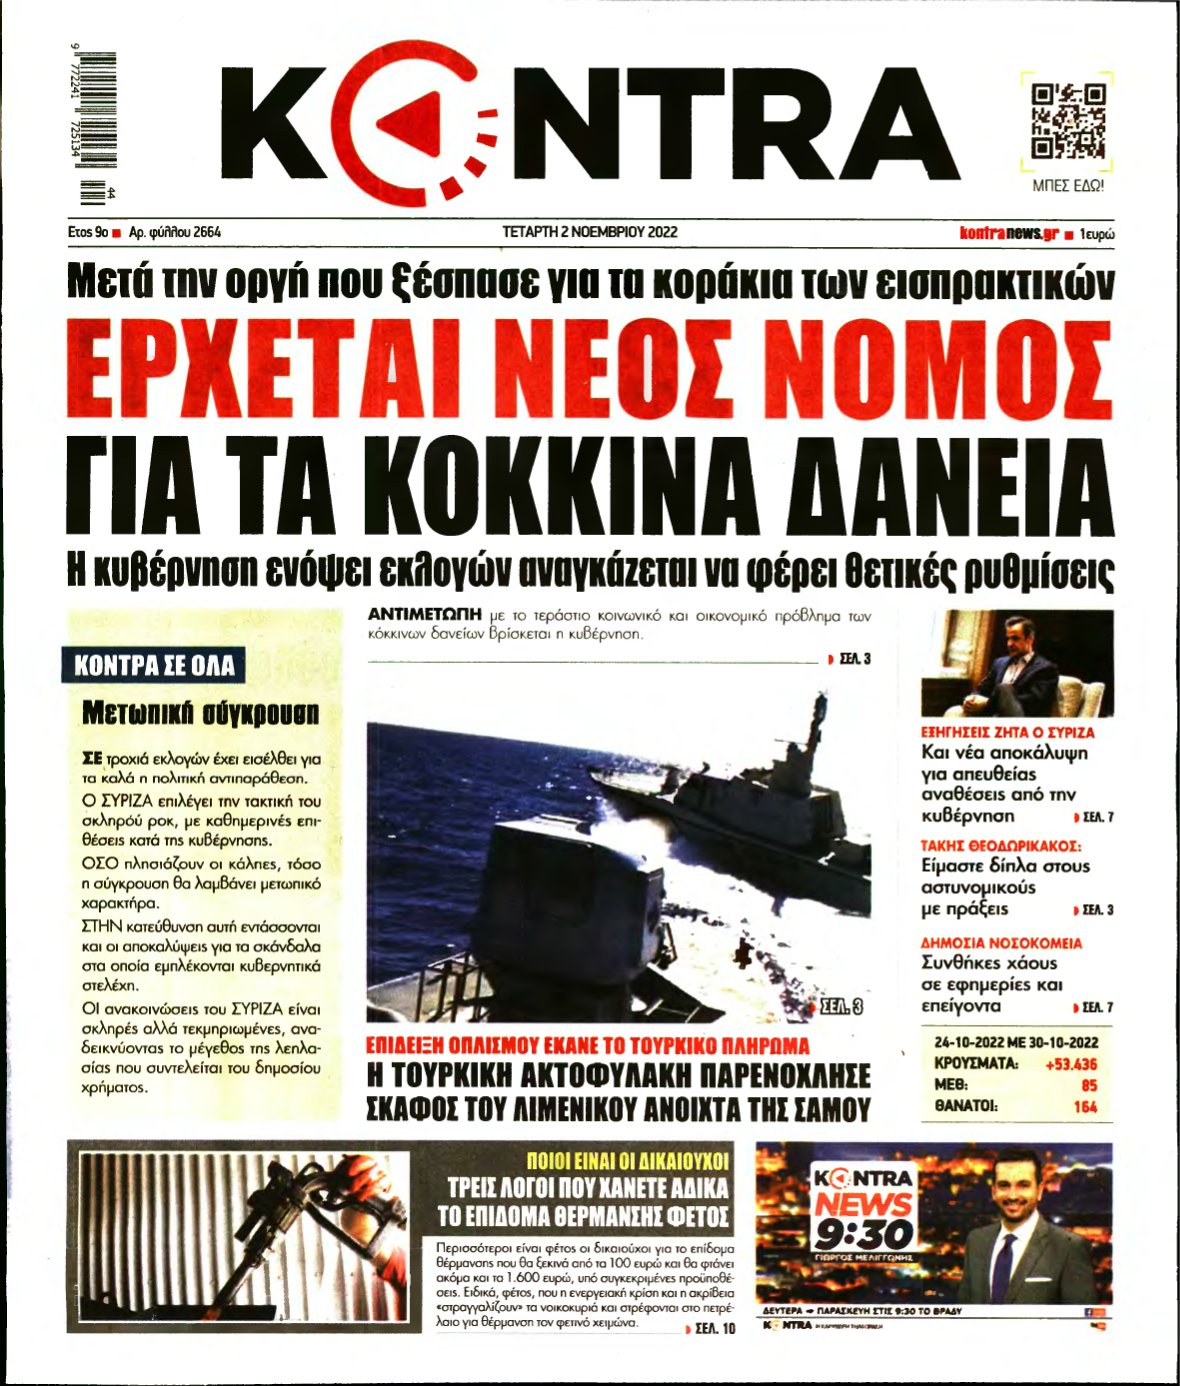 KONTRA NEWS – 02/11/2022